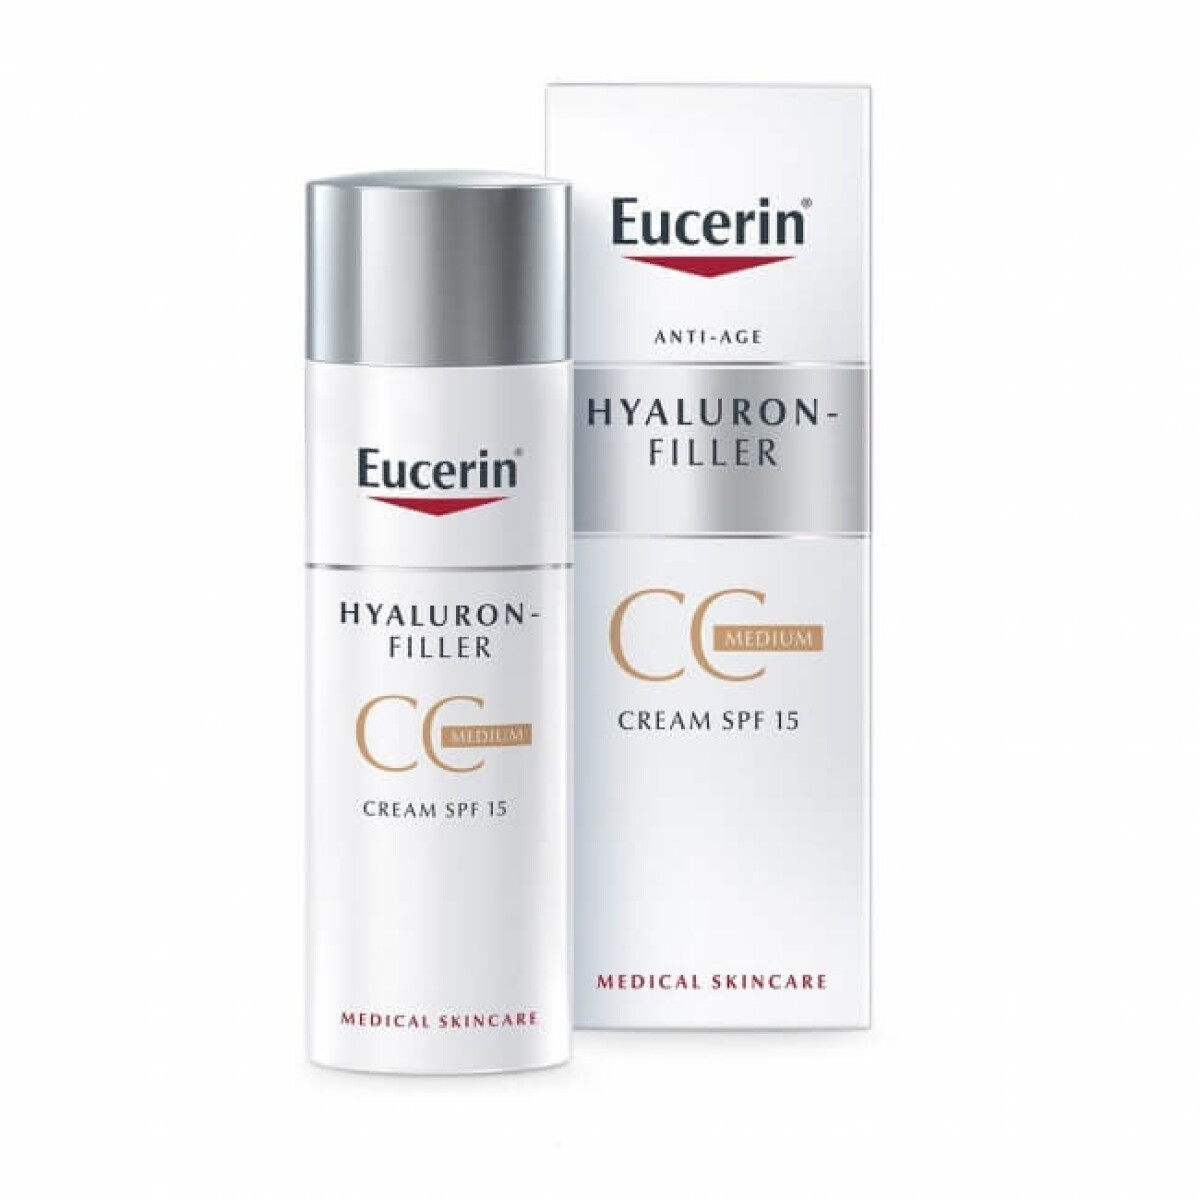 Eucerin Hyaluron-filler Cc Cream Medium 50 Ml. 